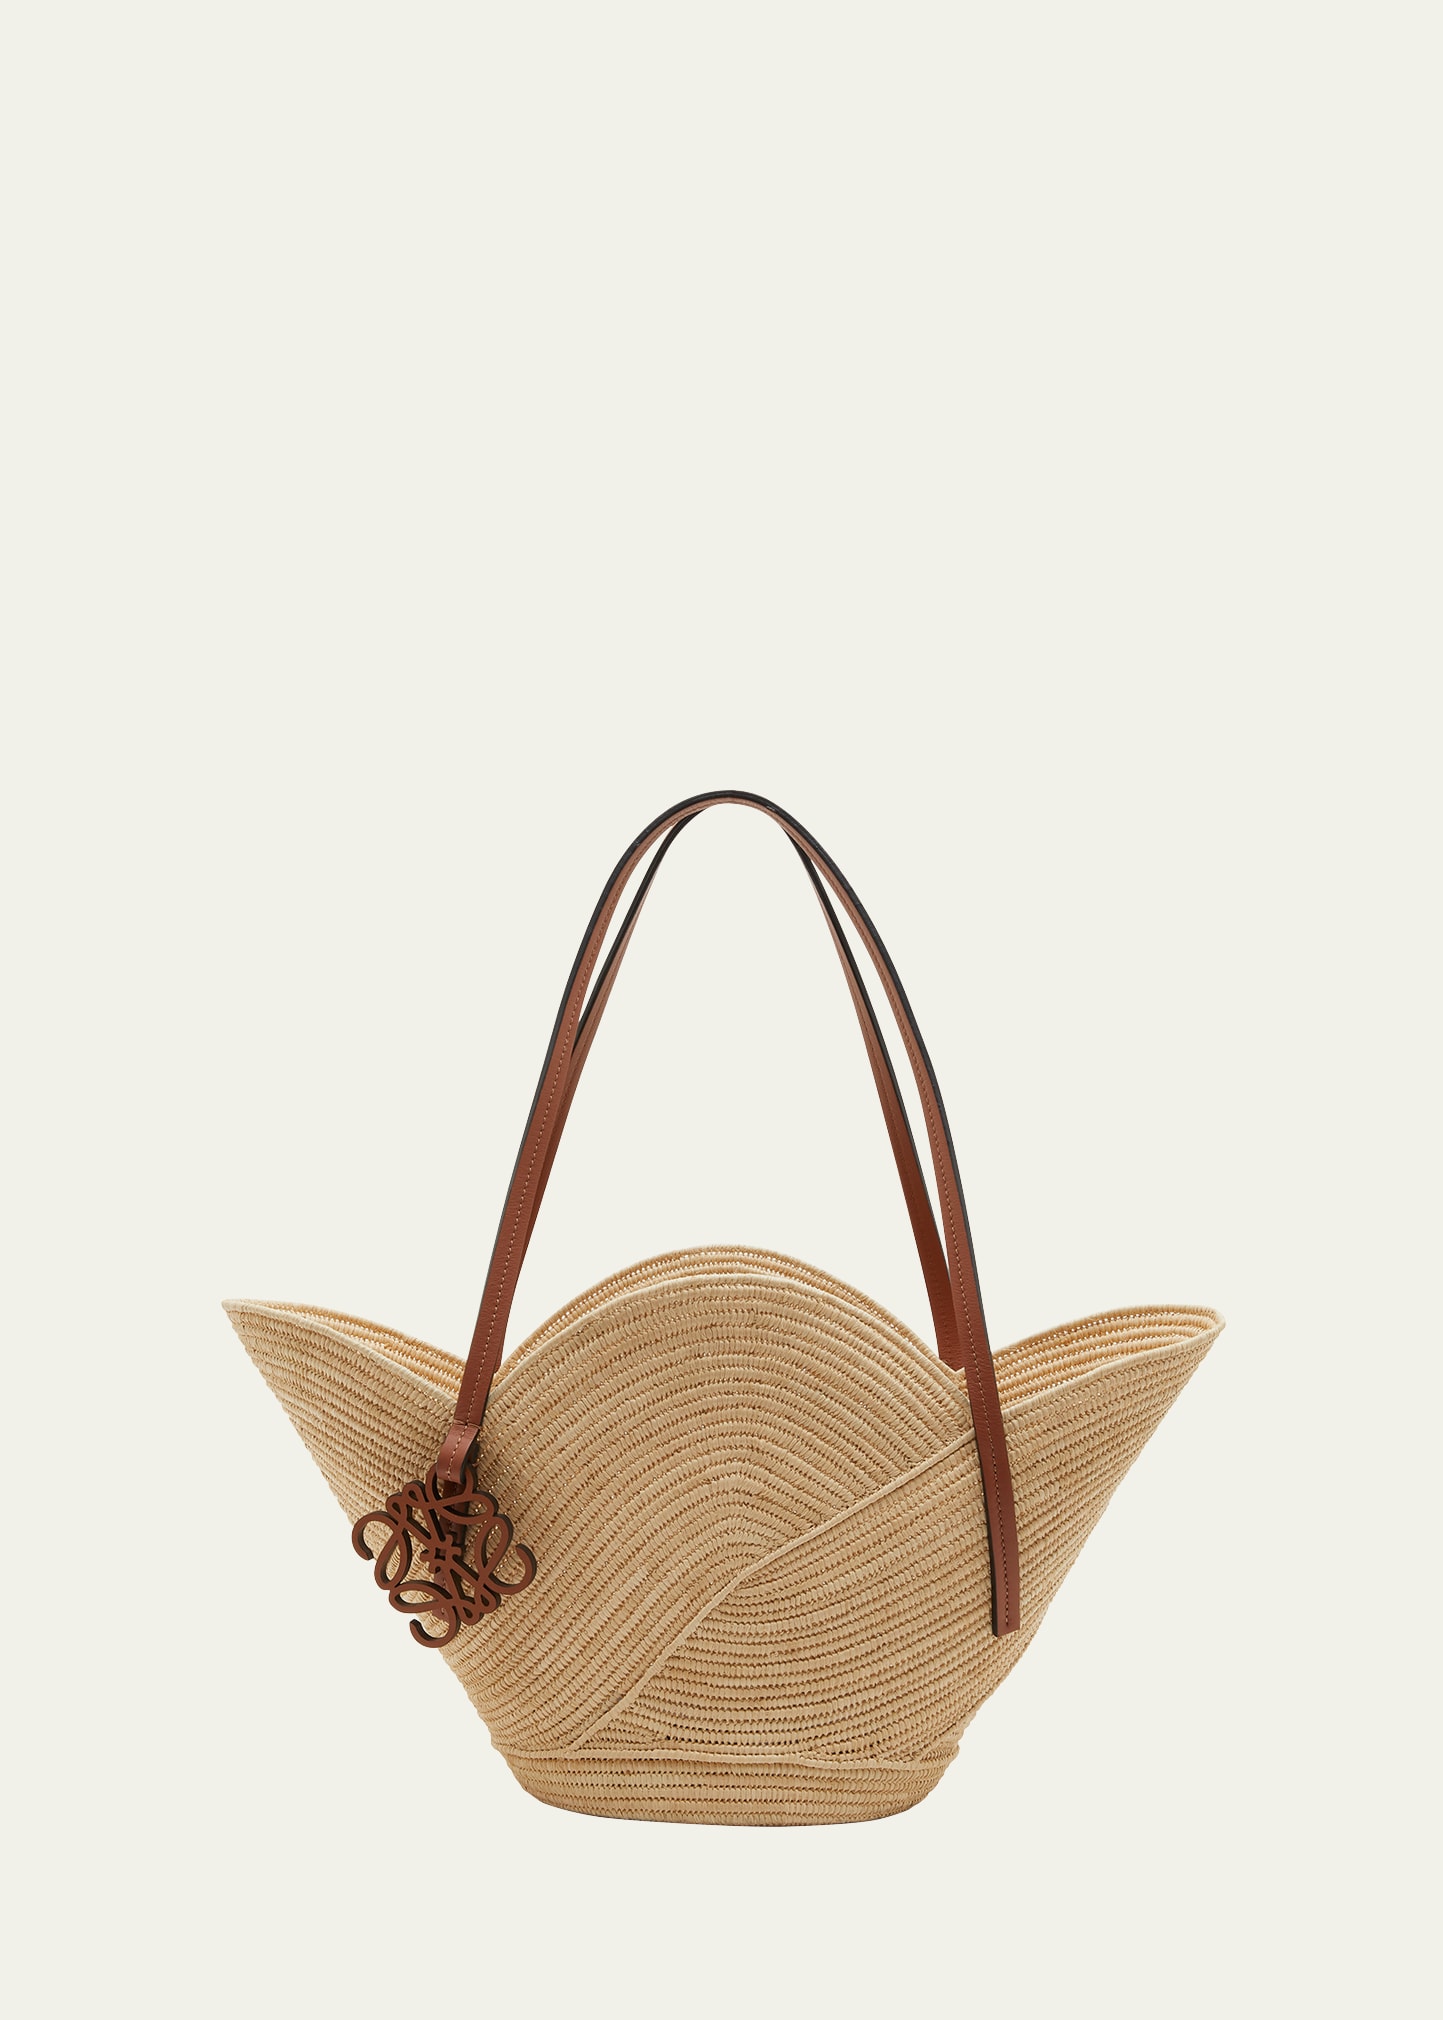 Loewe X Paula's Ibiza Petal Basket Bag In Raffia With Leather Handles In Natural/tan